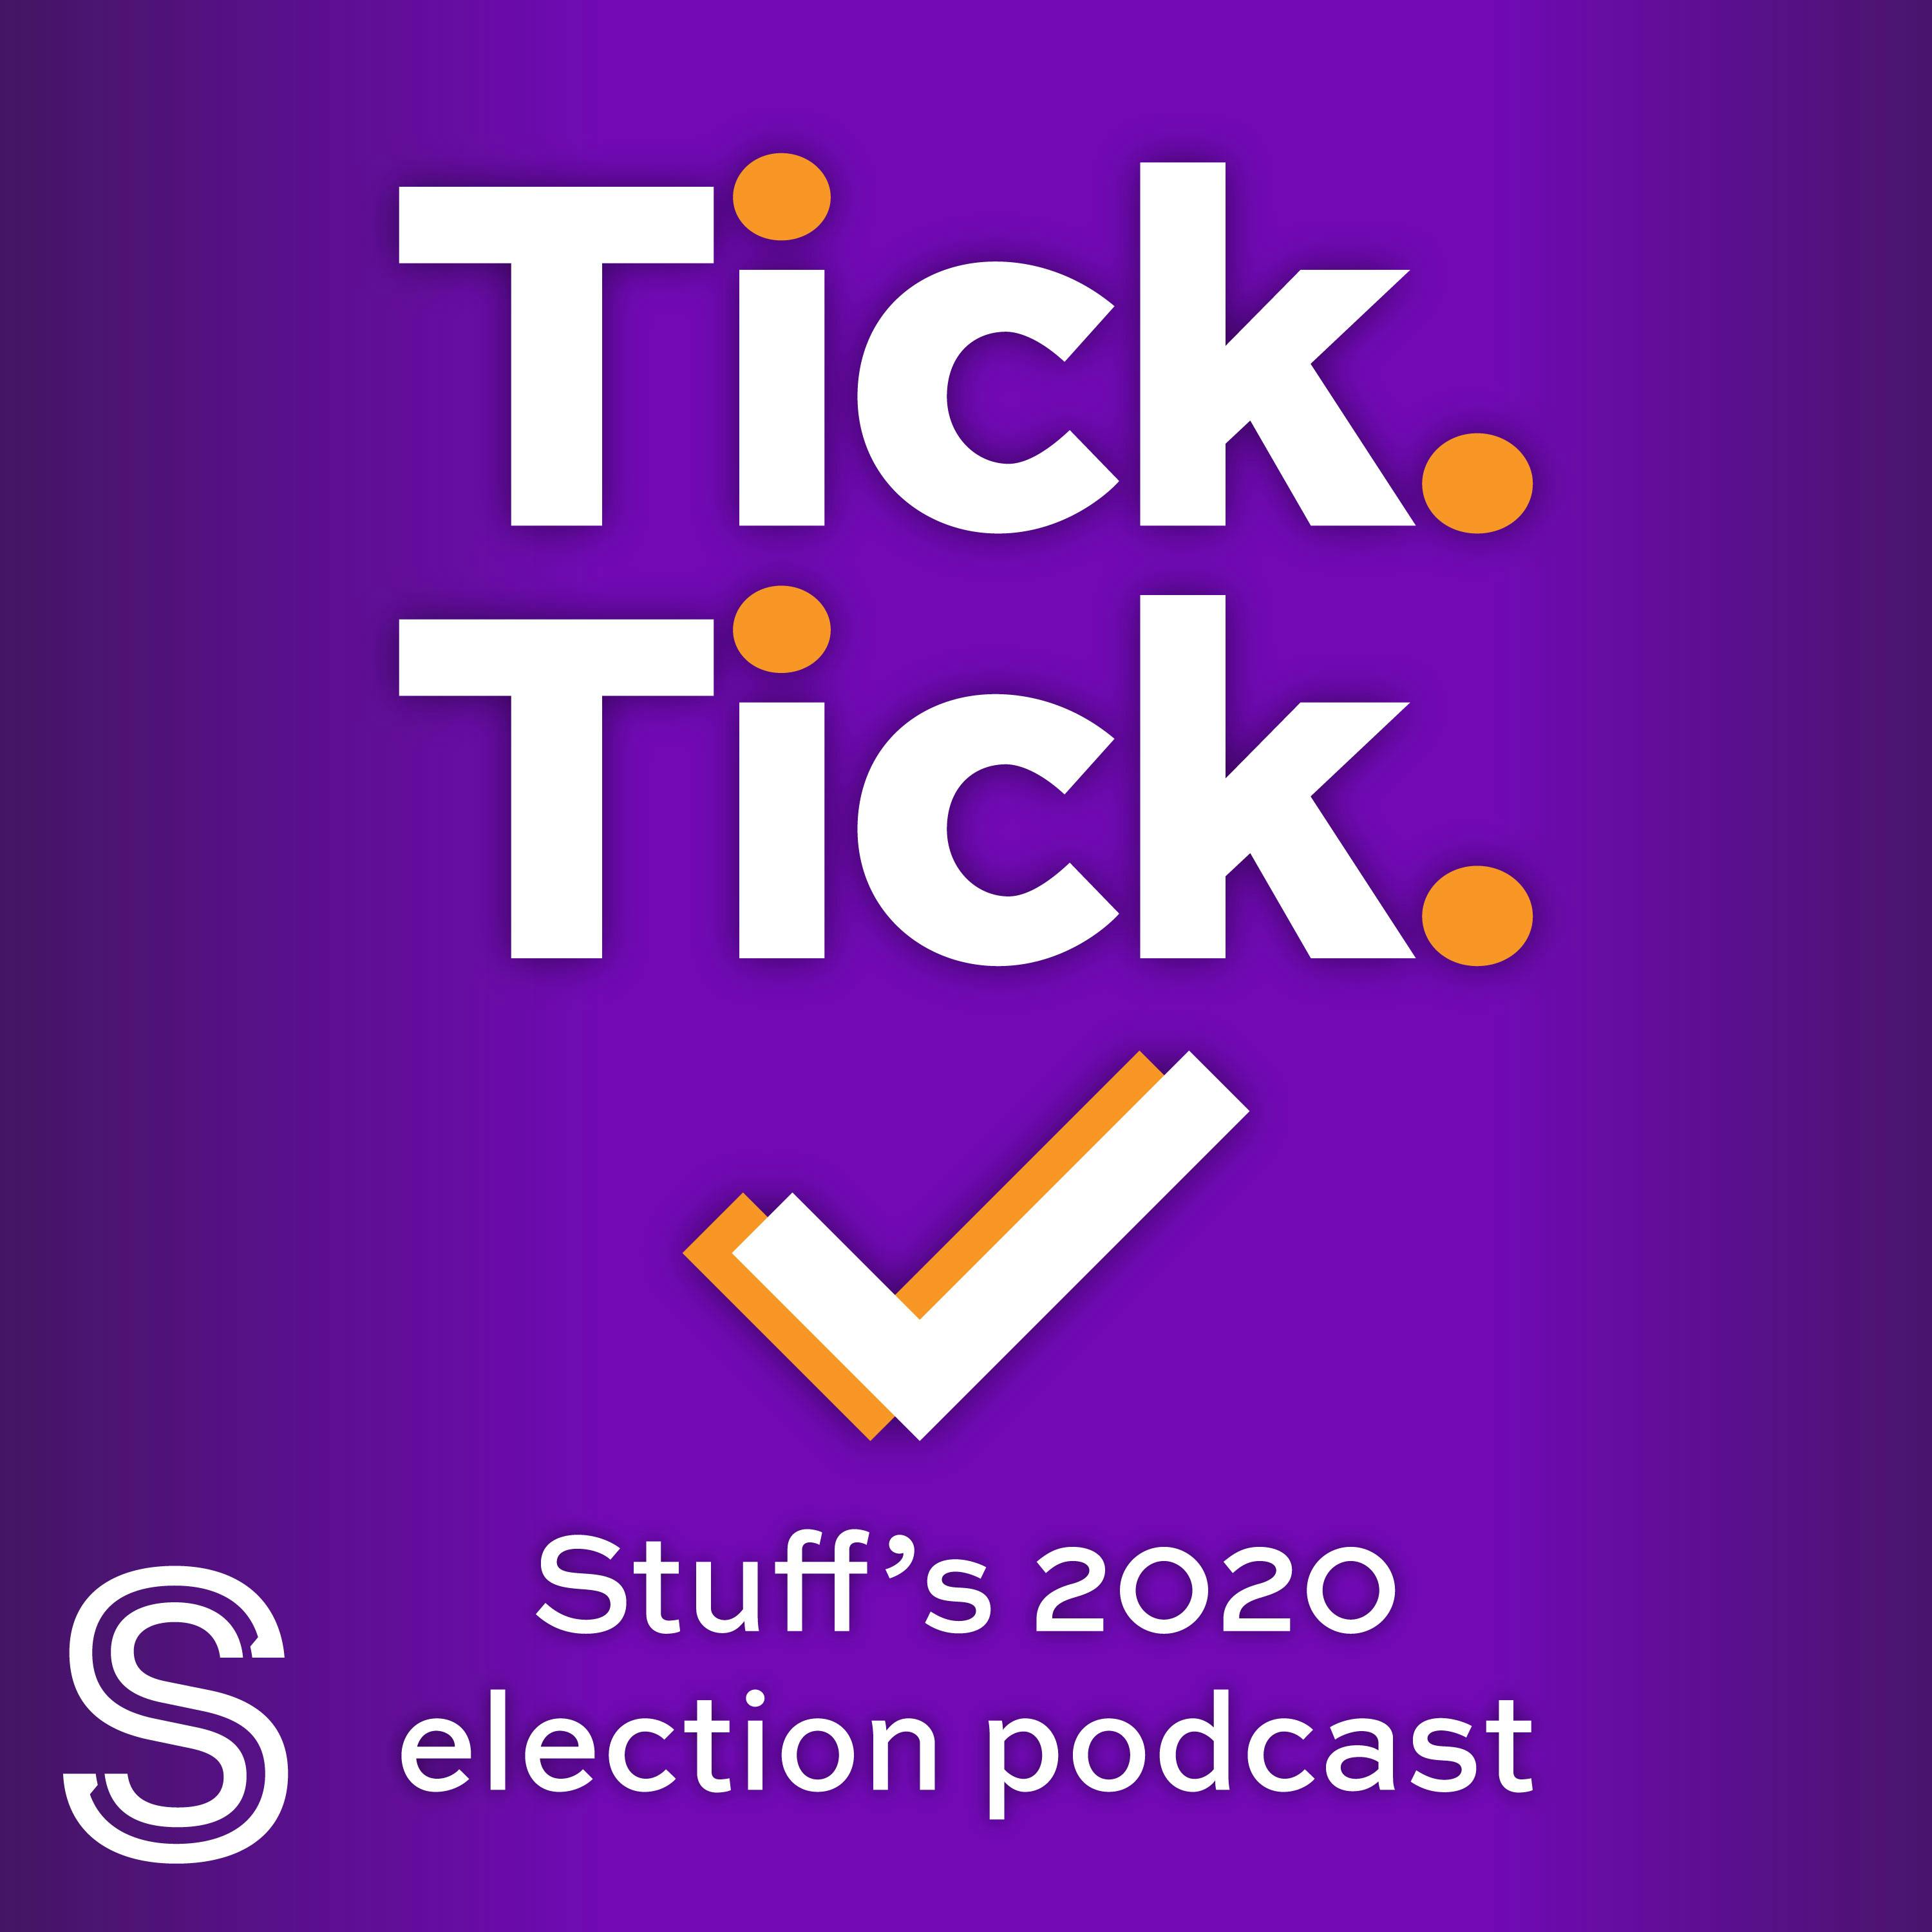 Tick. Tick. podcast show image